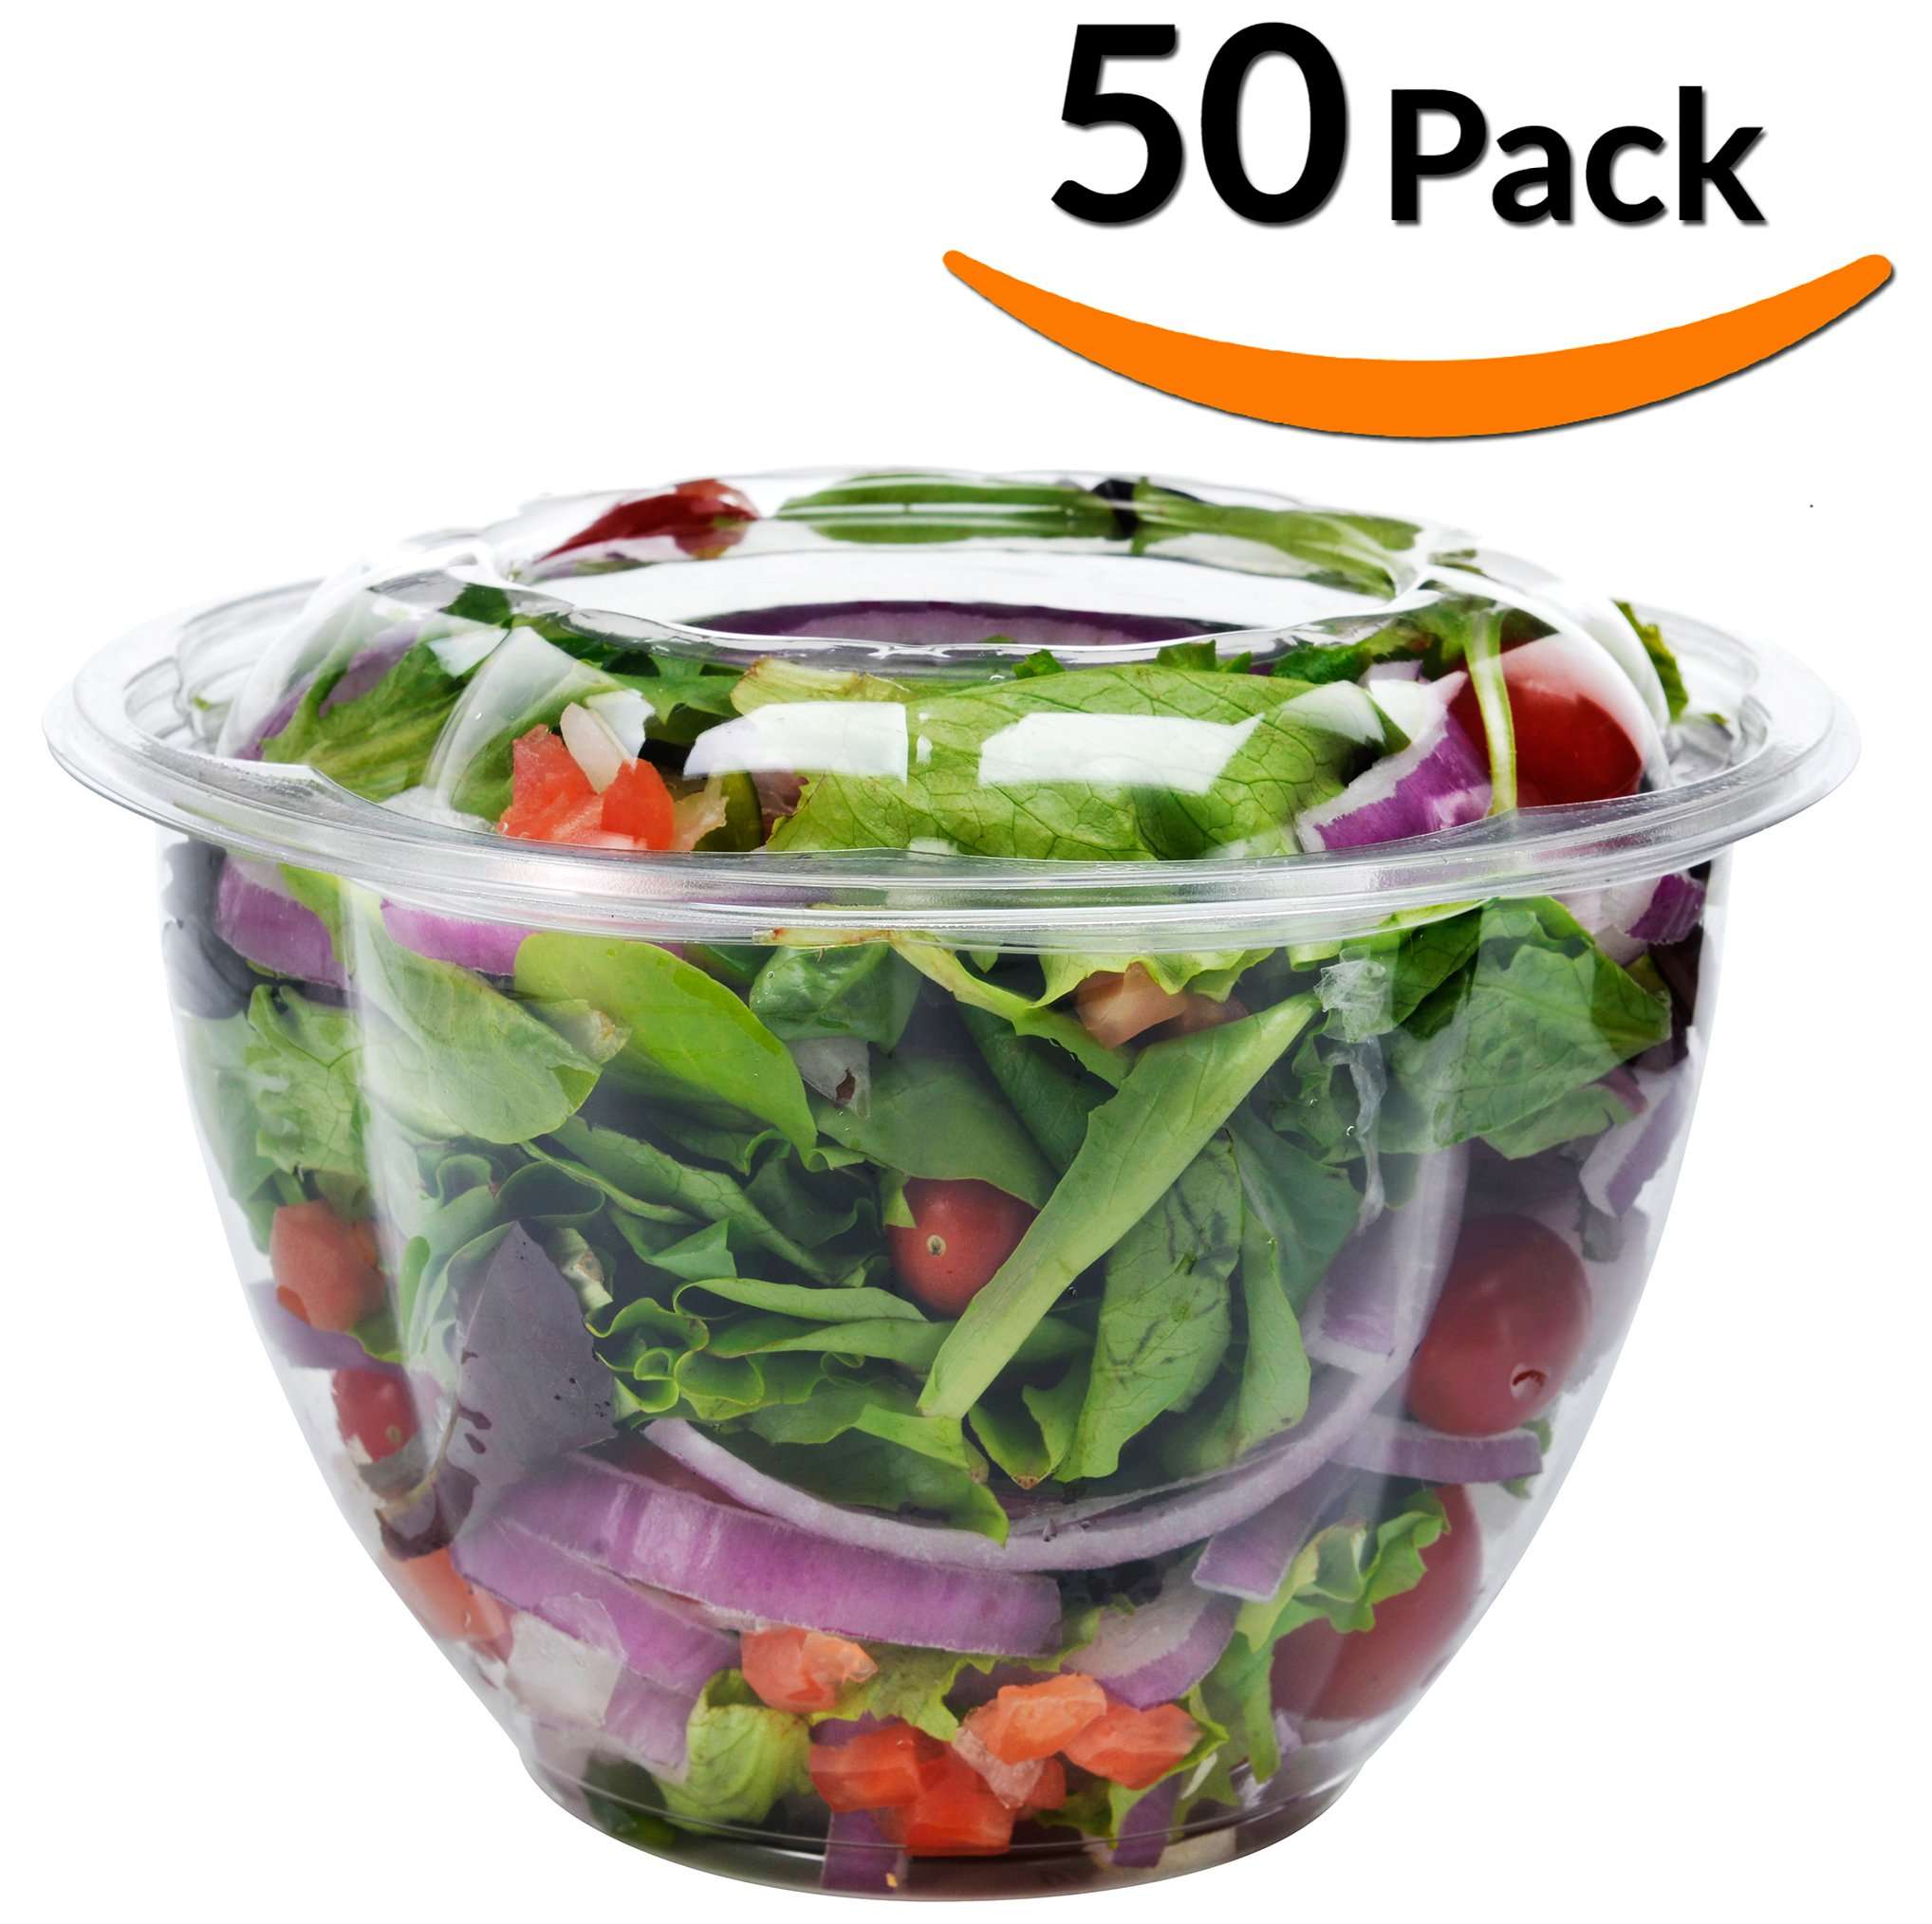 50Pc Salad To